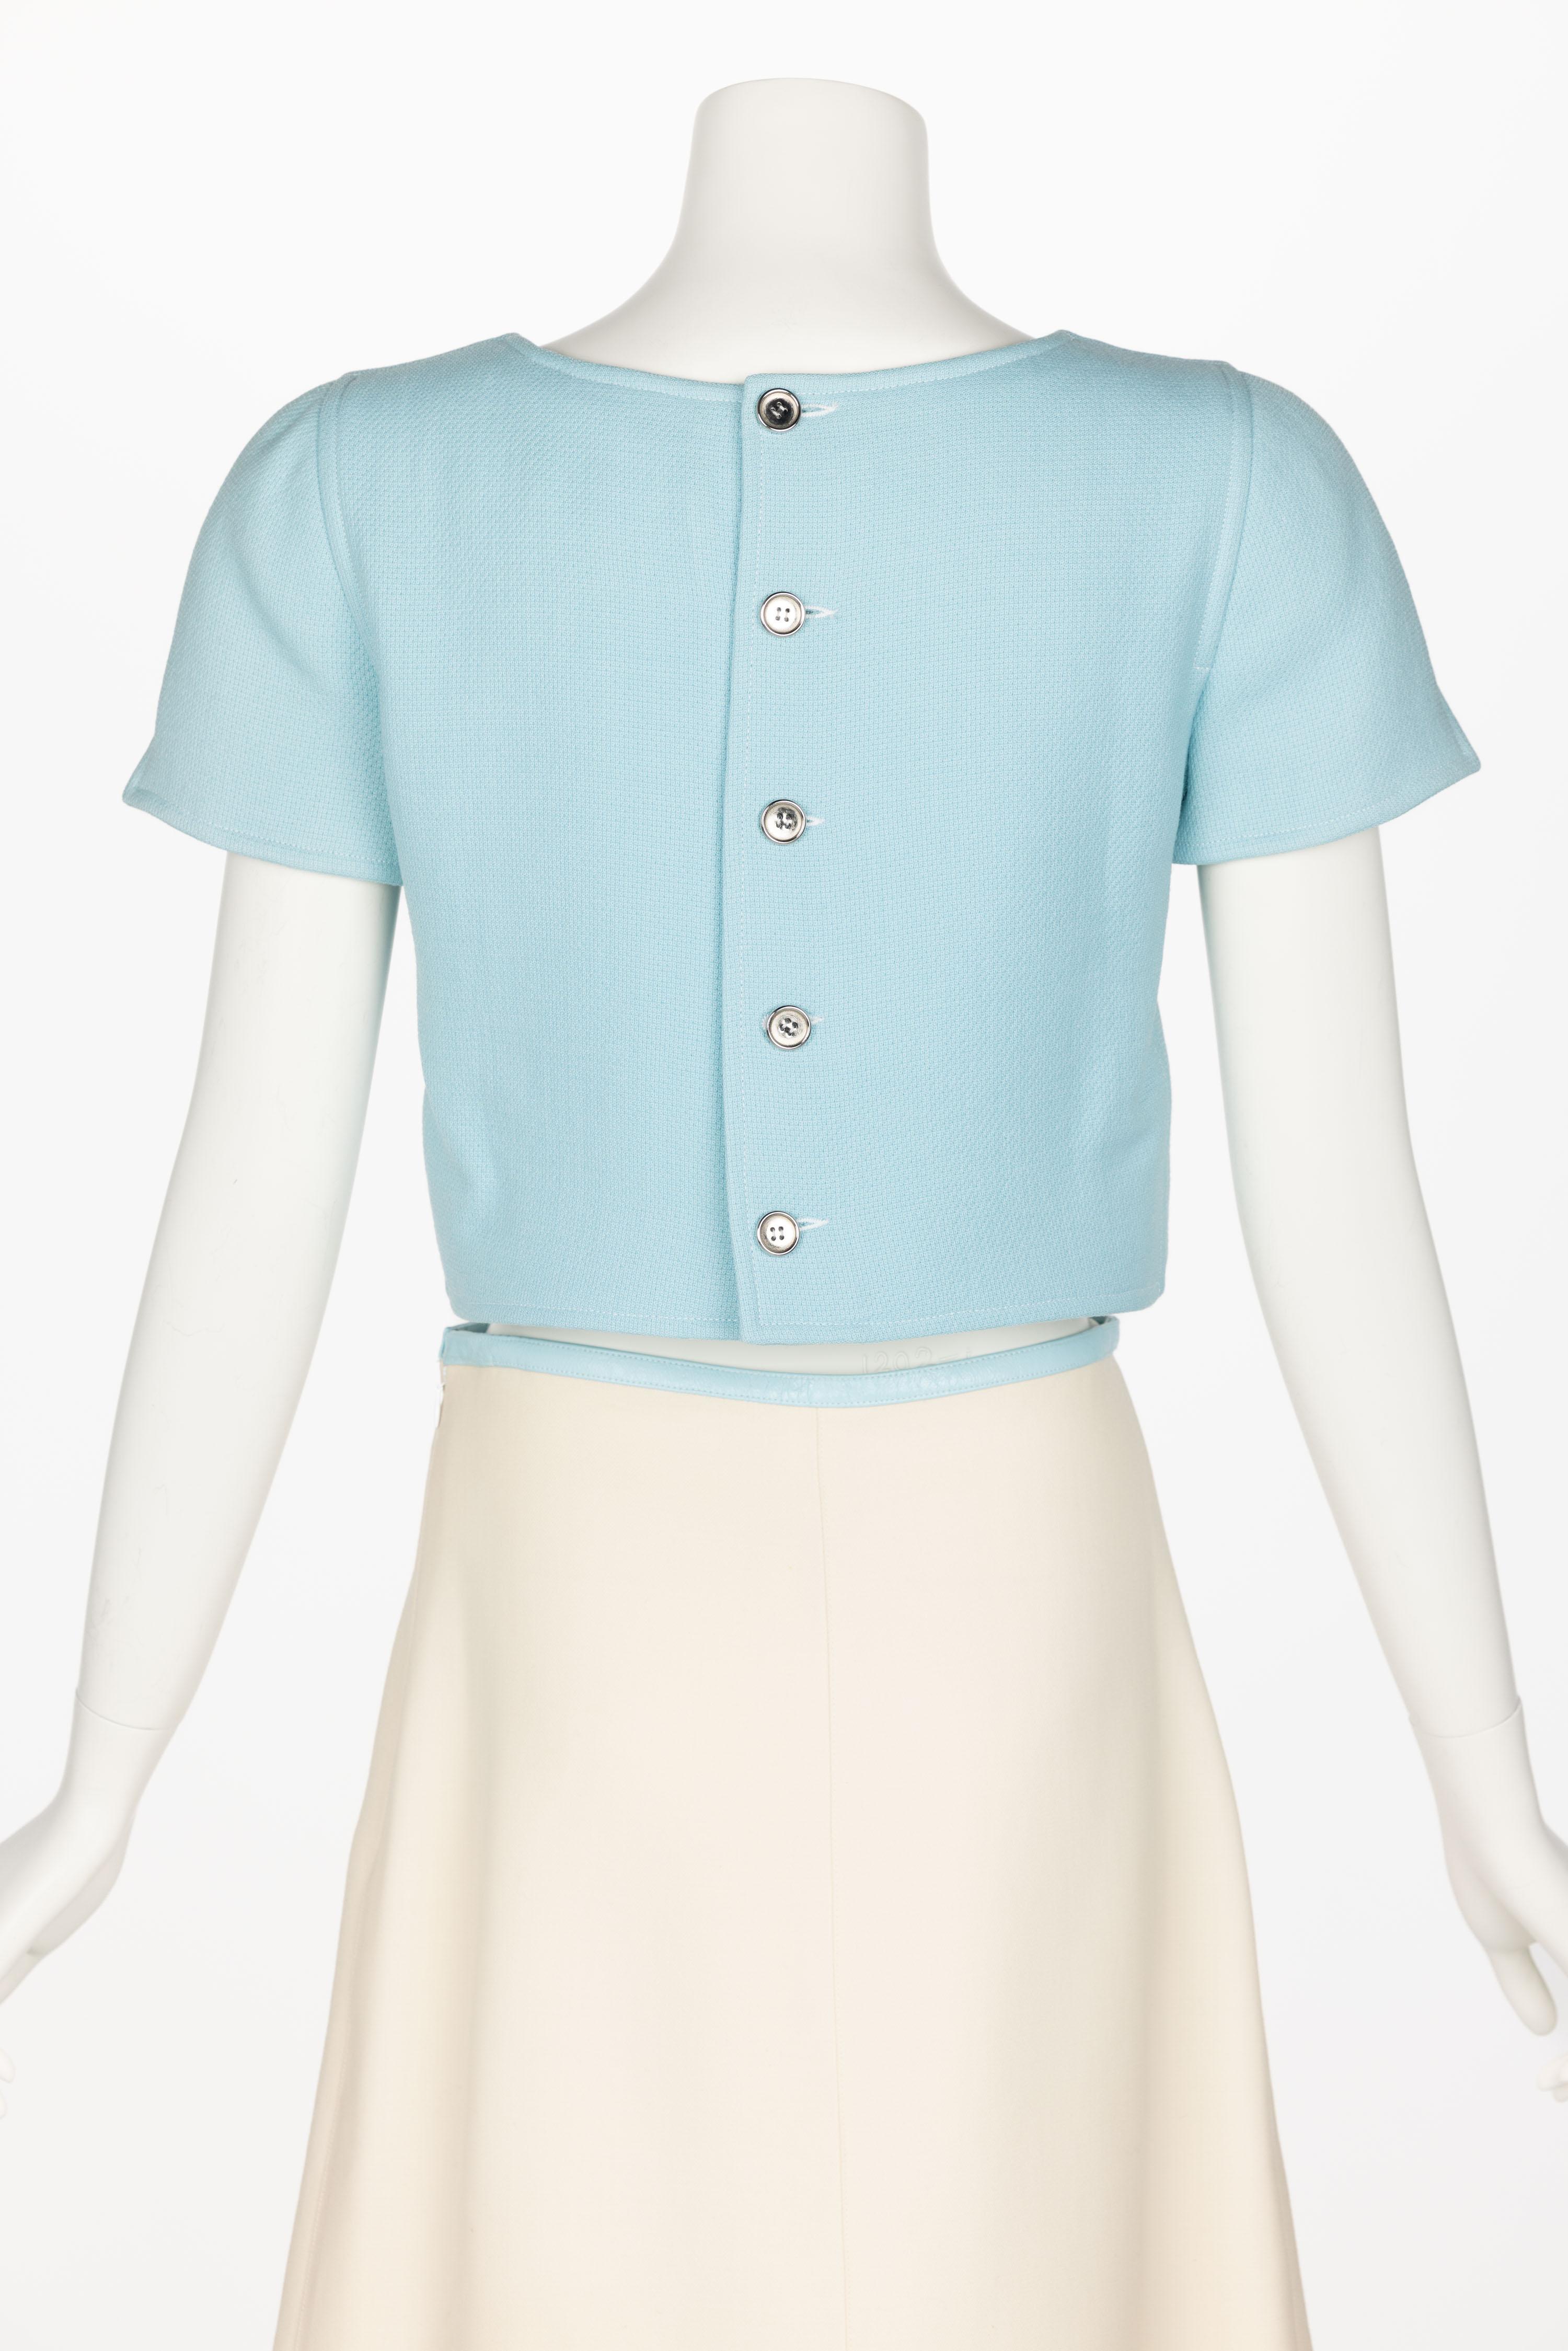 Vintage Courreges Paris Baby Blue Creme Cropped Top and Skirt Set 1